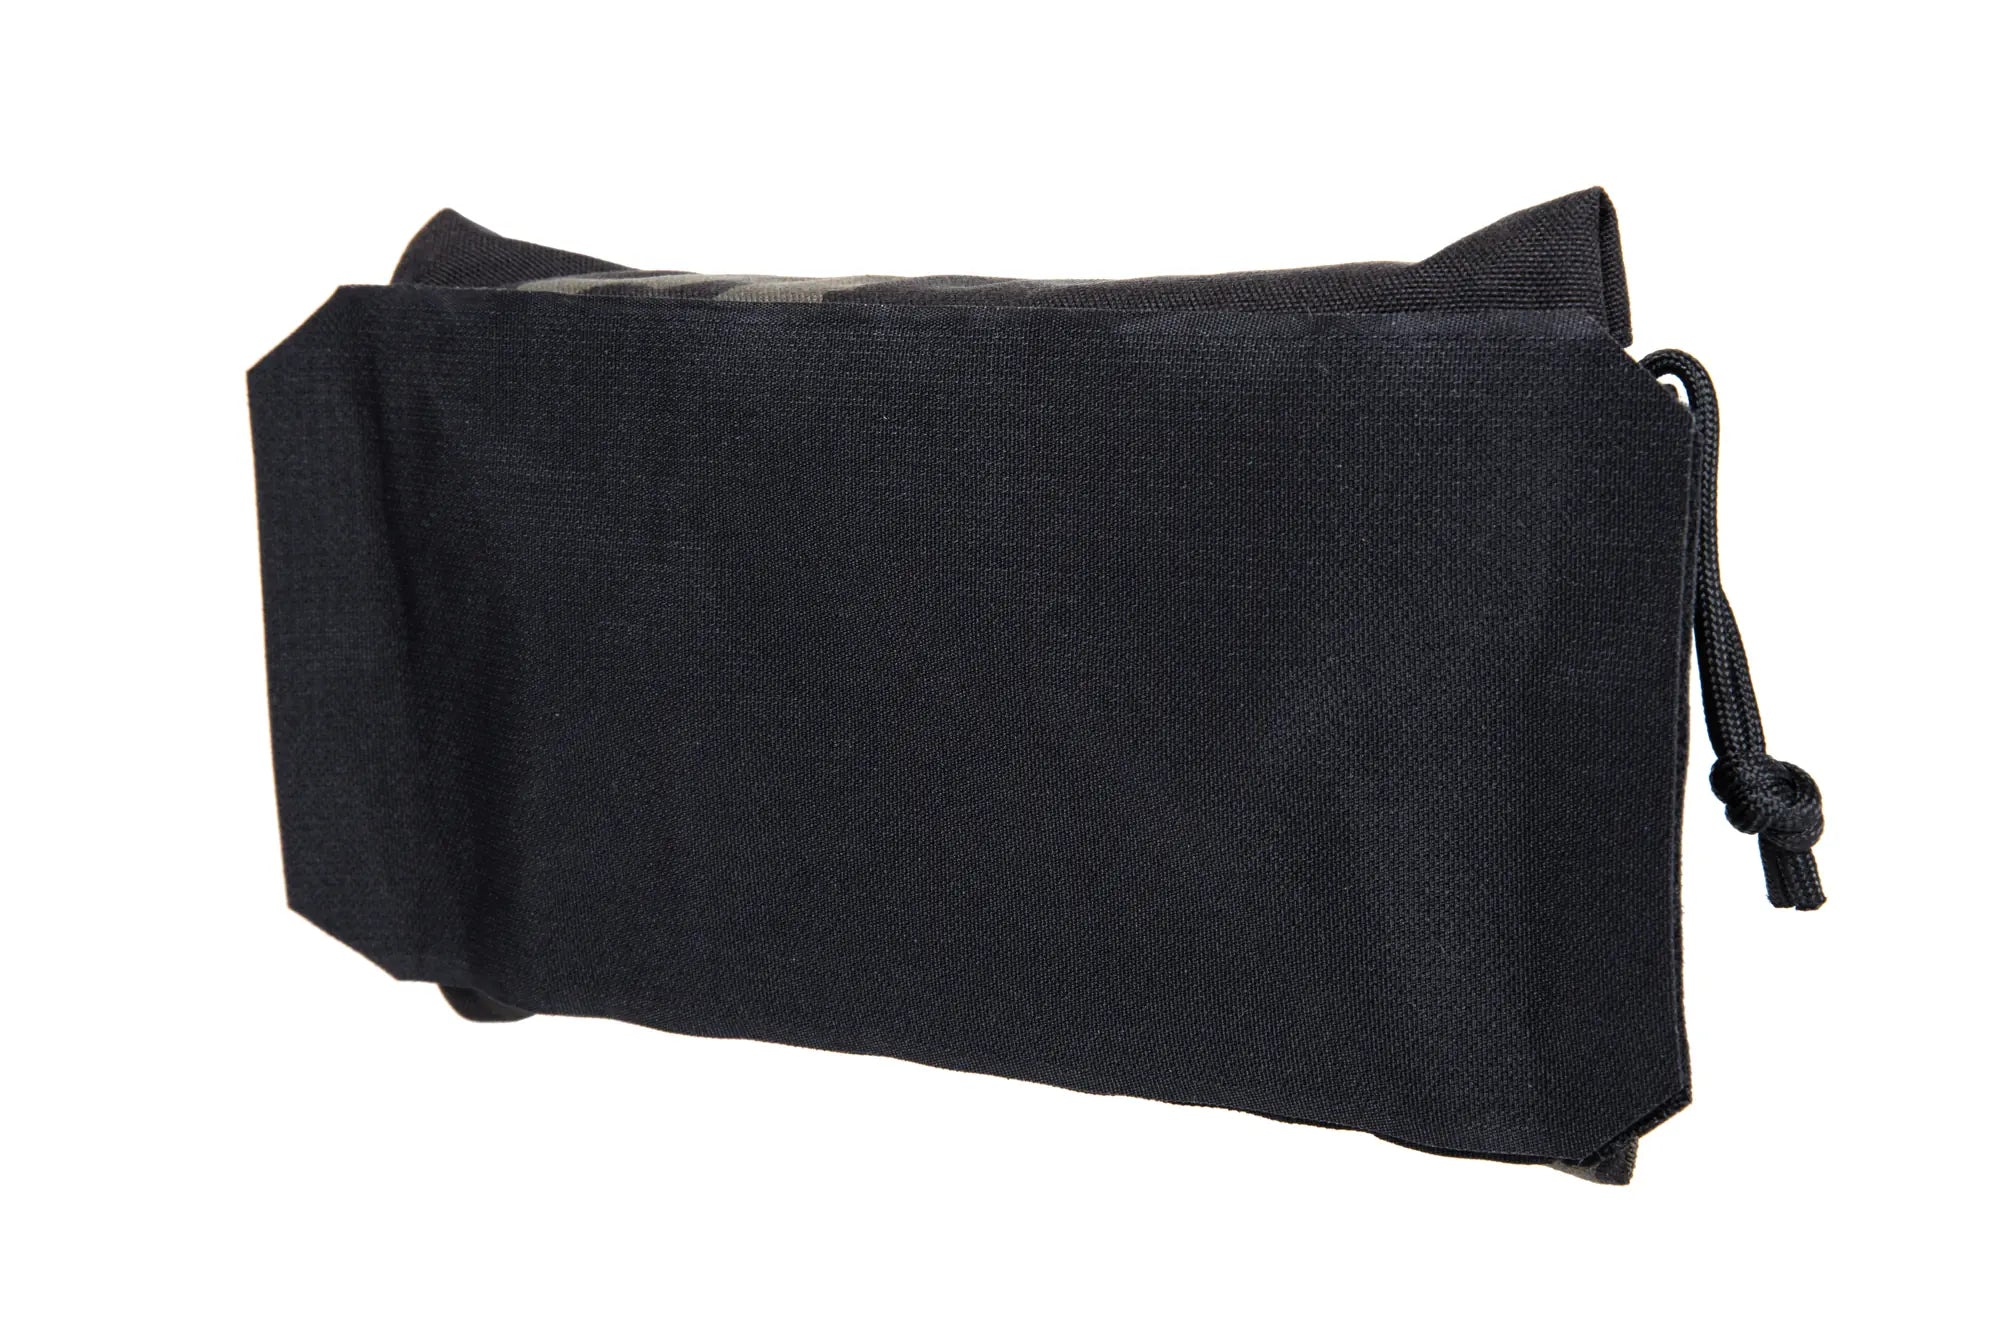 Primal Gear AC-01 Candy Bag Multicam Black universal pocket